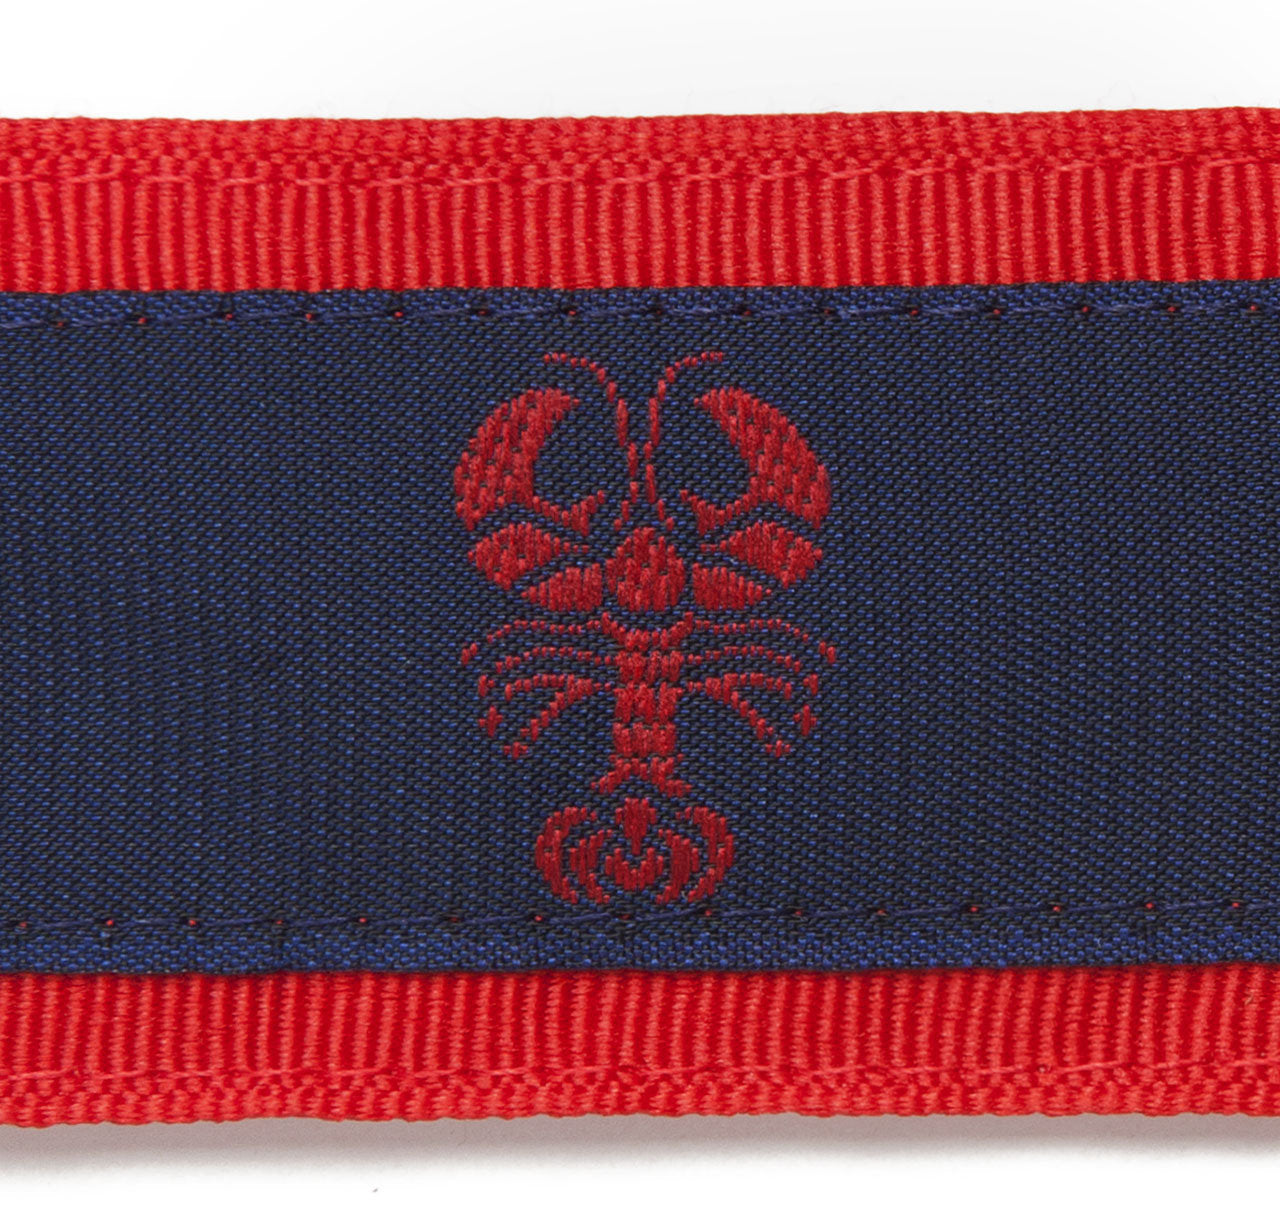 Sir Jack's Lobster Ribbon Belt